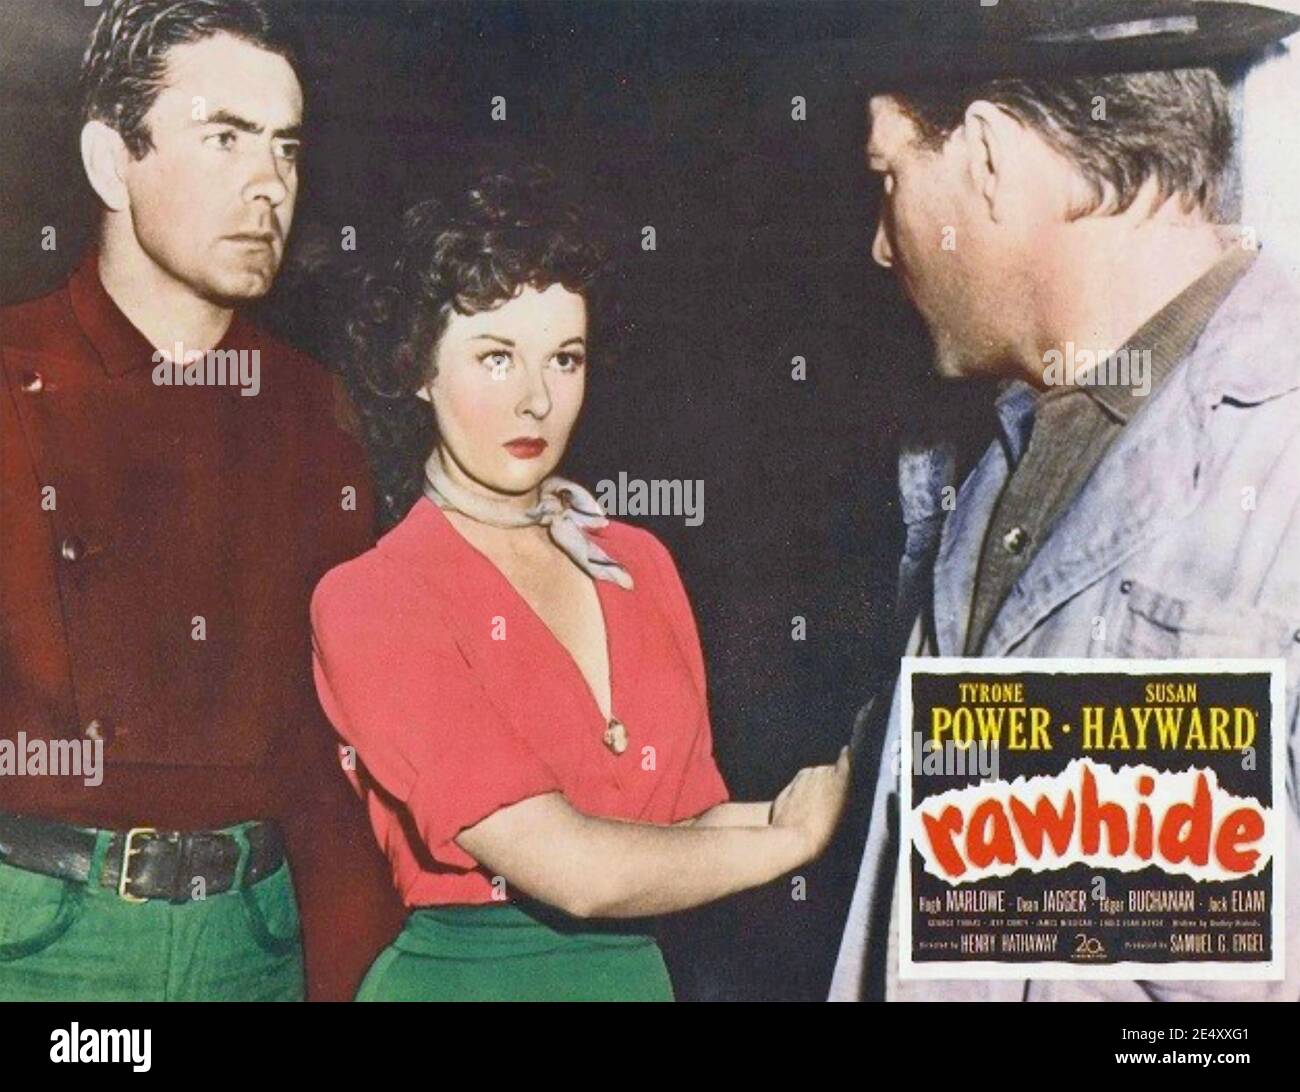 RAWHIDE 1951 20th Century Fox filmmwith da sinistra: Tyrone Power, Susan Hayward, Hugh Marlowe Foto Stock